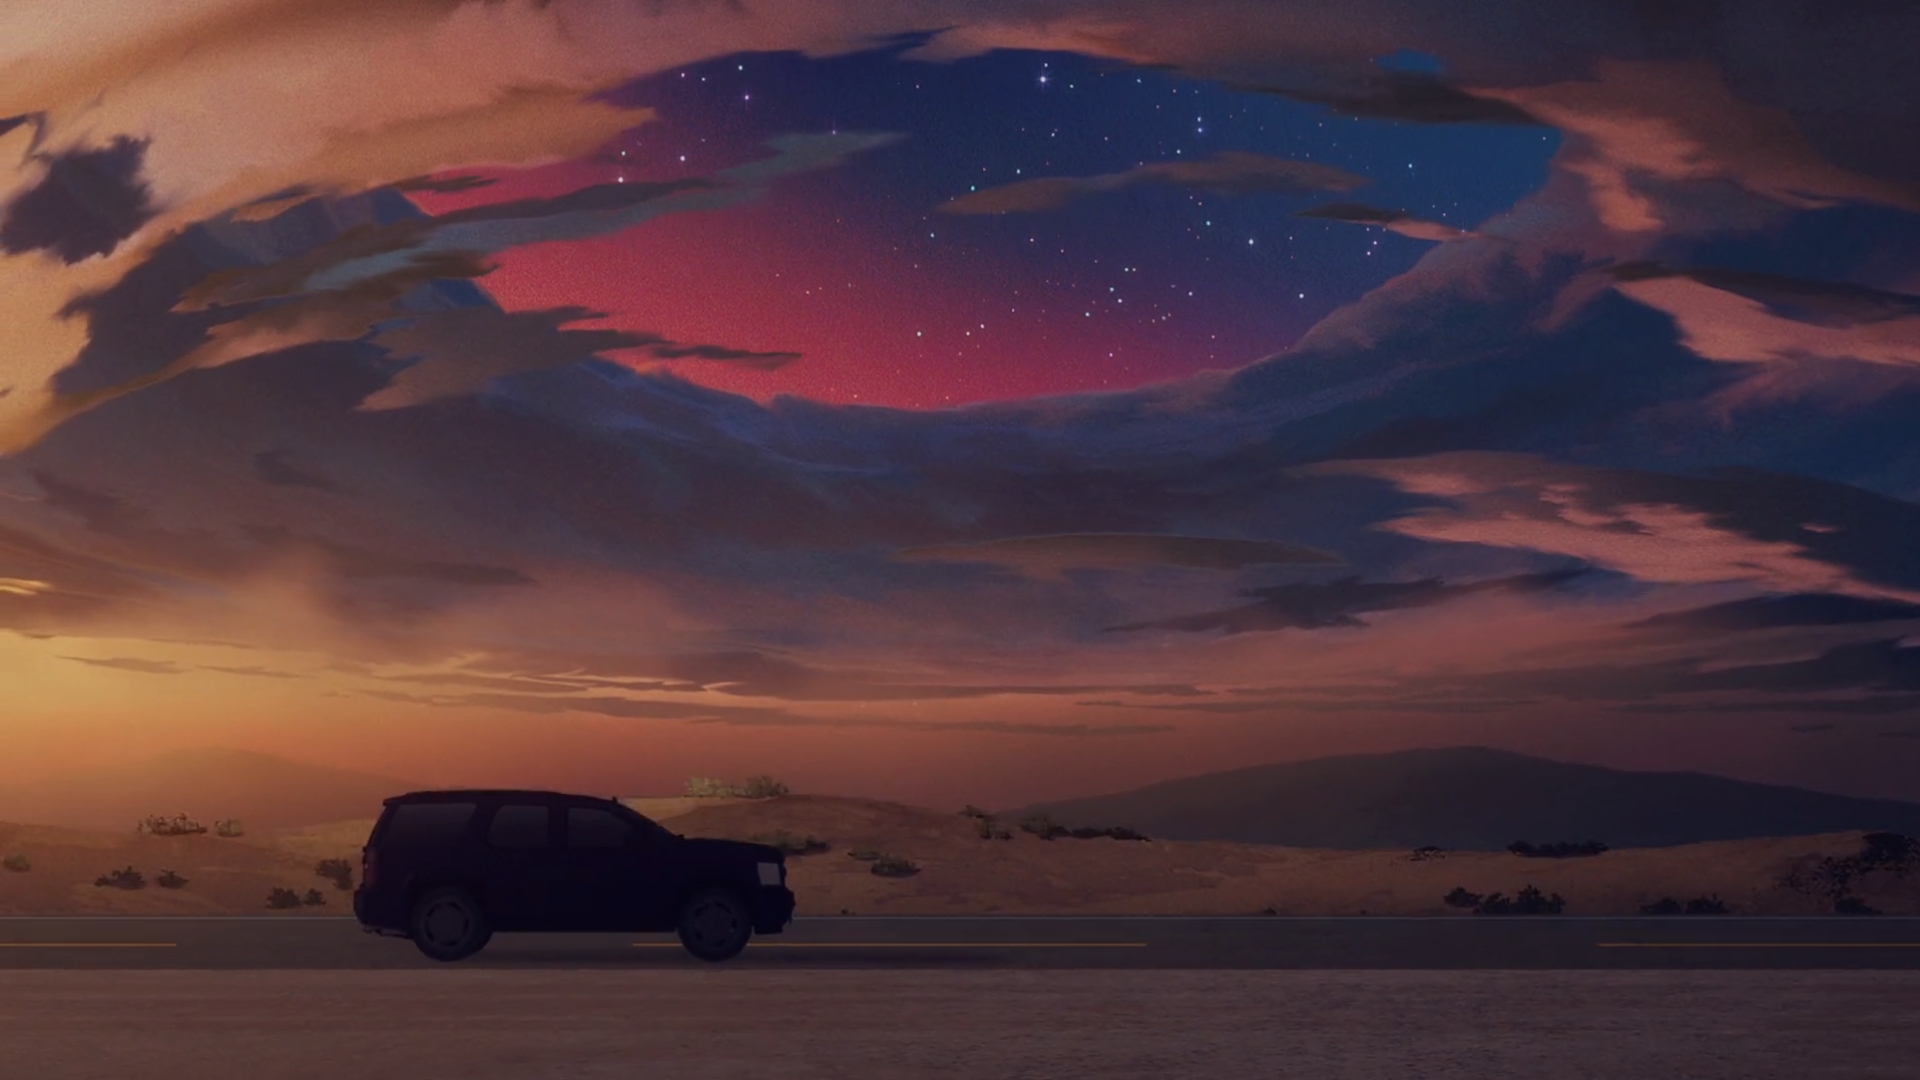 Anime 1920x1080 Fate series Fate strange Fake vehicle road sky clouds anime Anime screenshot stars sunset sunset glow